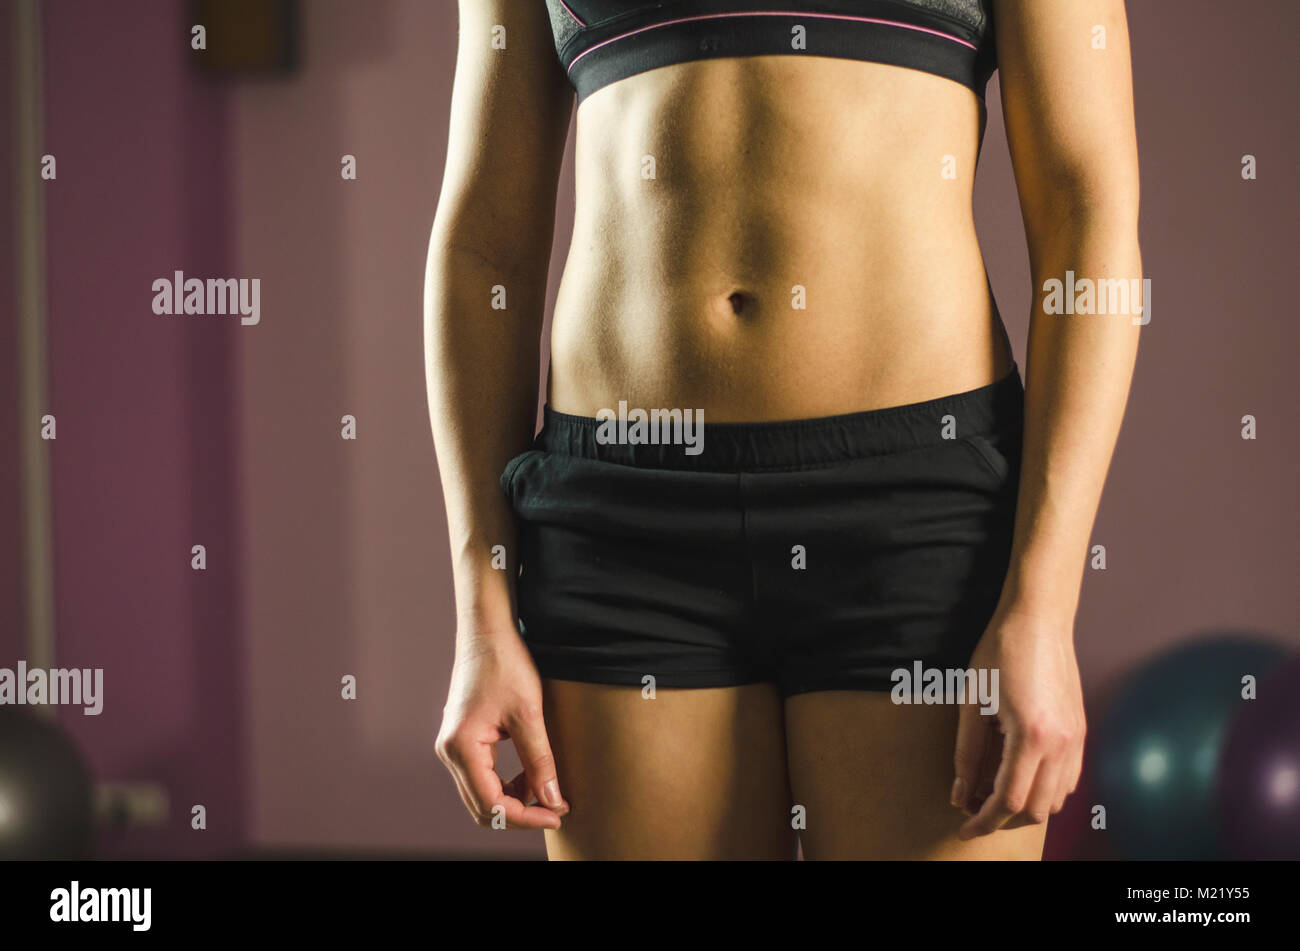 https://c8.alamy.com/comp/M21Y55/flat-tummy-of-young-female-training-at-fitness-club-beautiful-healthy-M21Y55.jpg